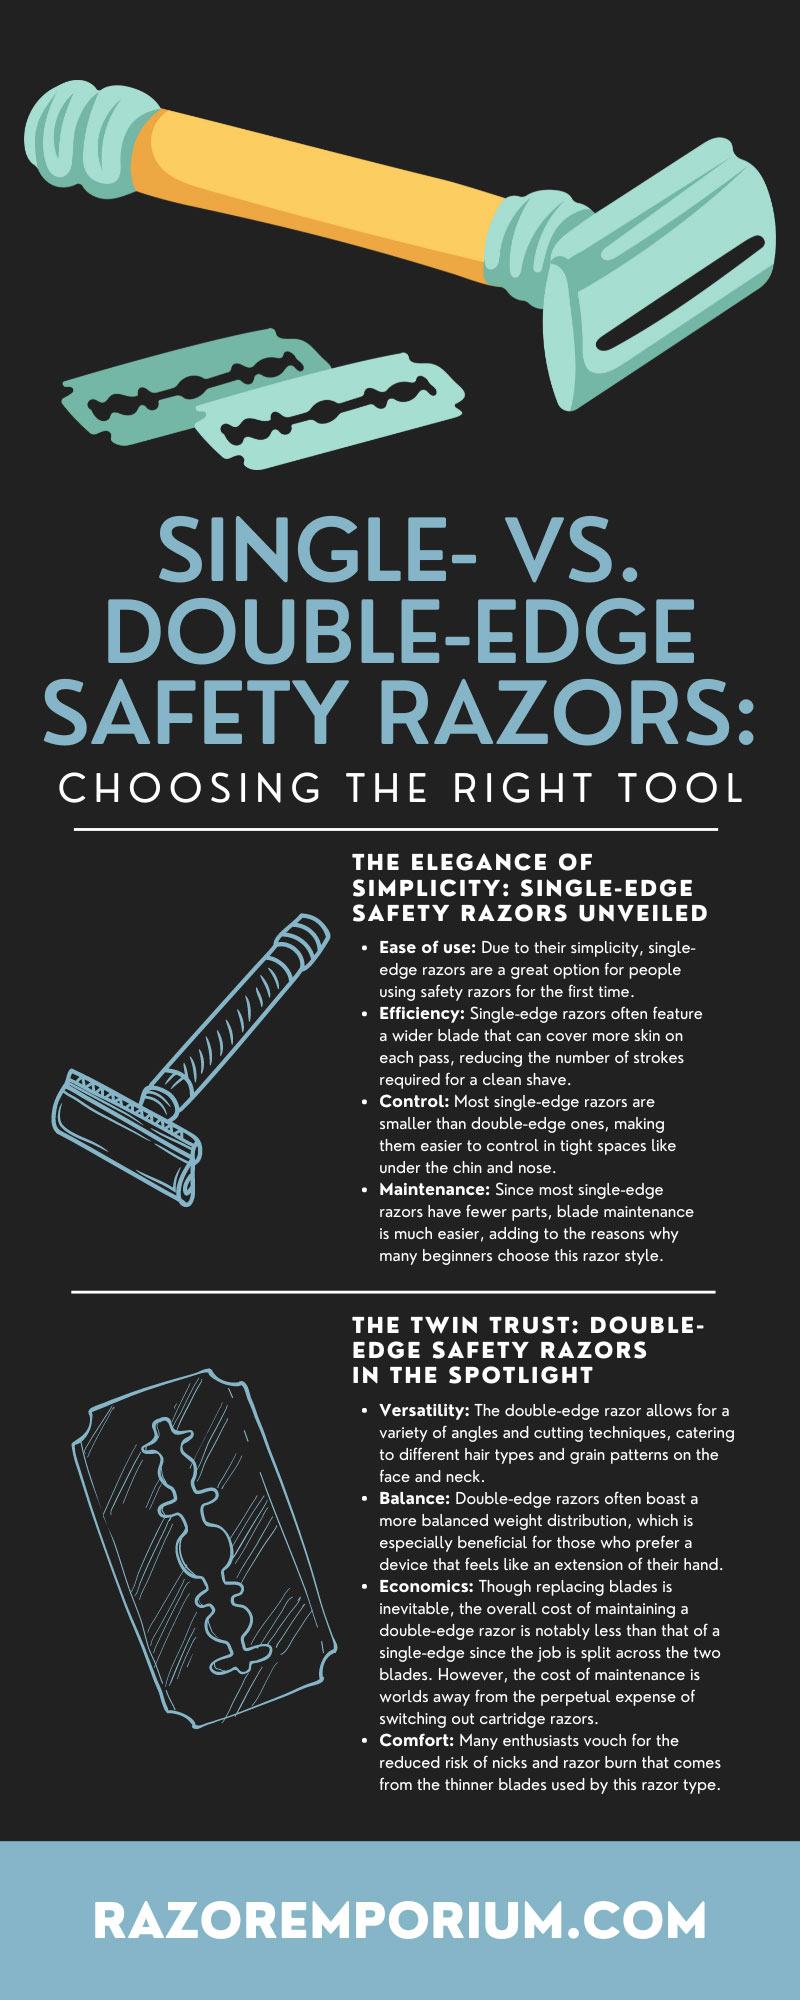 Single- vs. Double-Edge Safety Razors: Choosing the Right Tool